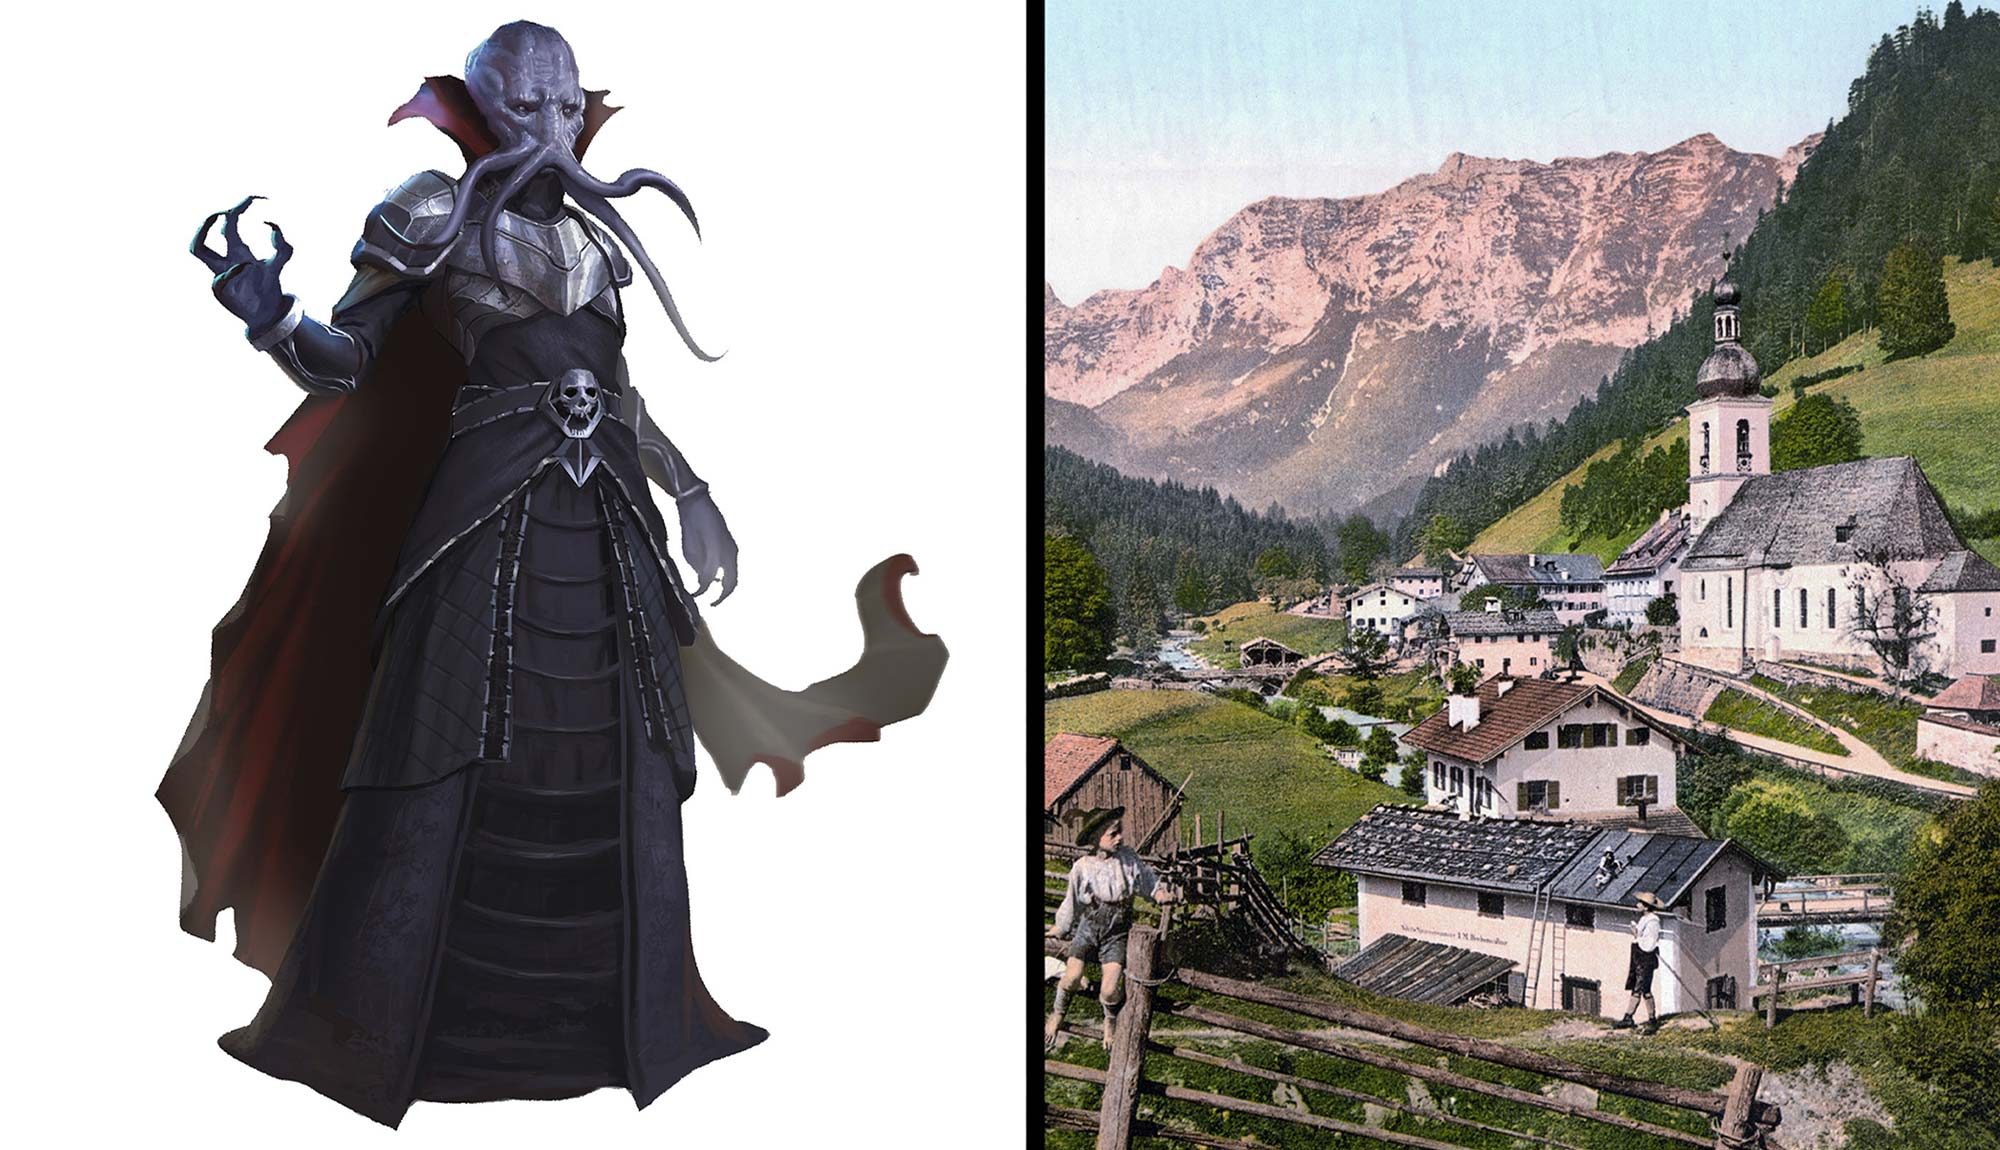 QUIZ: DnD Monster or Quaint European Village?